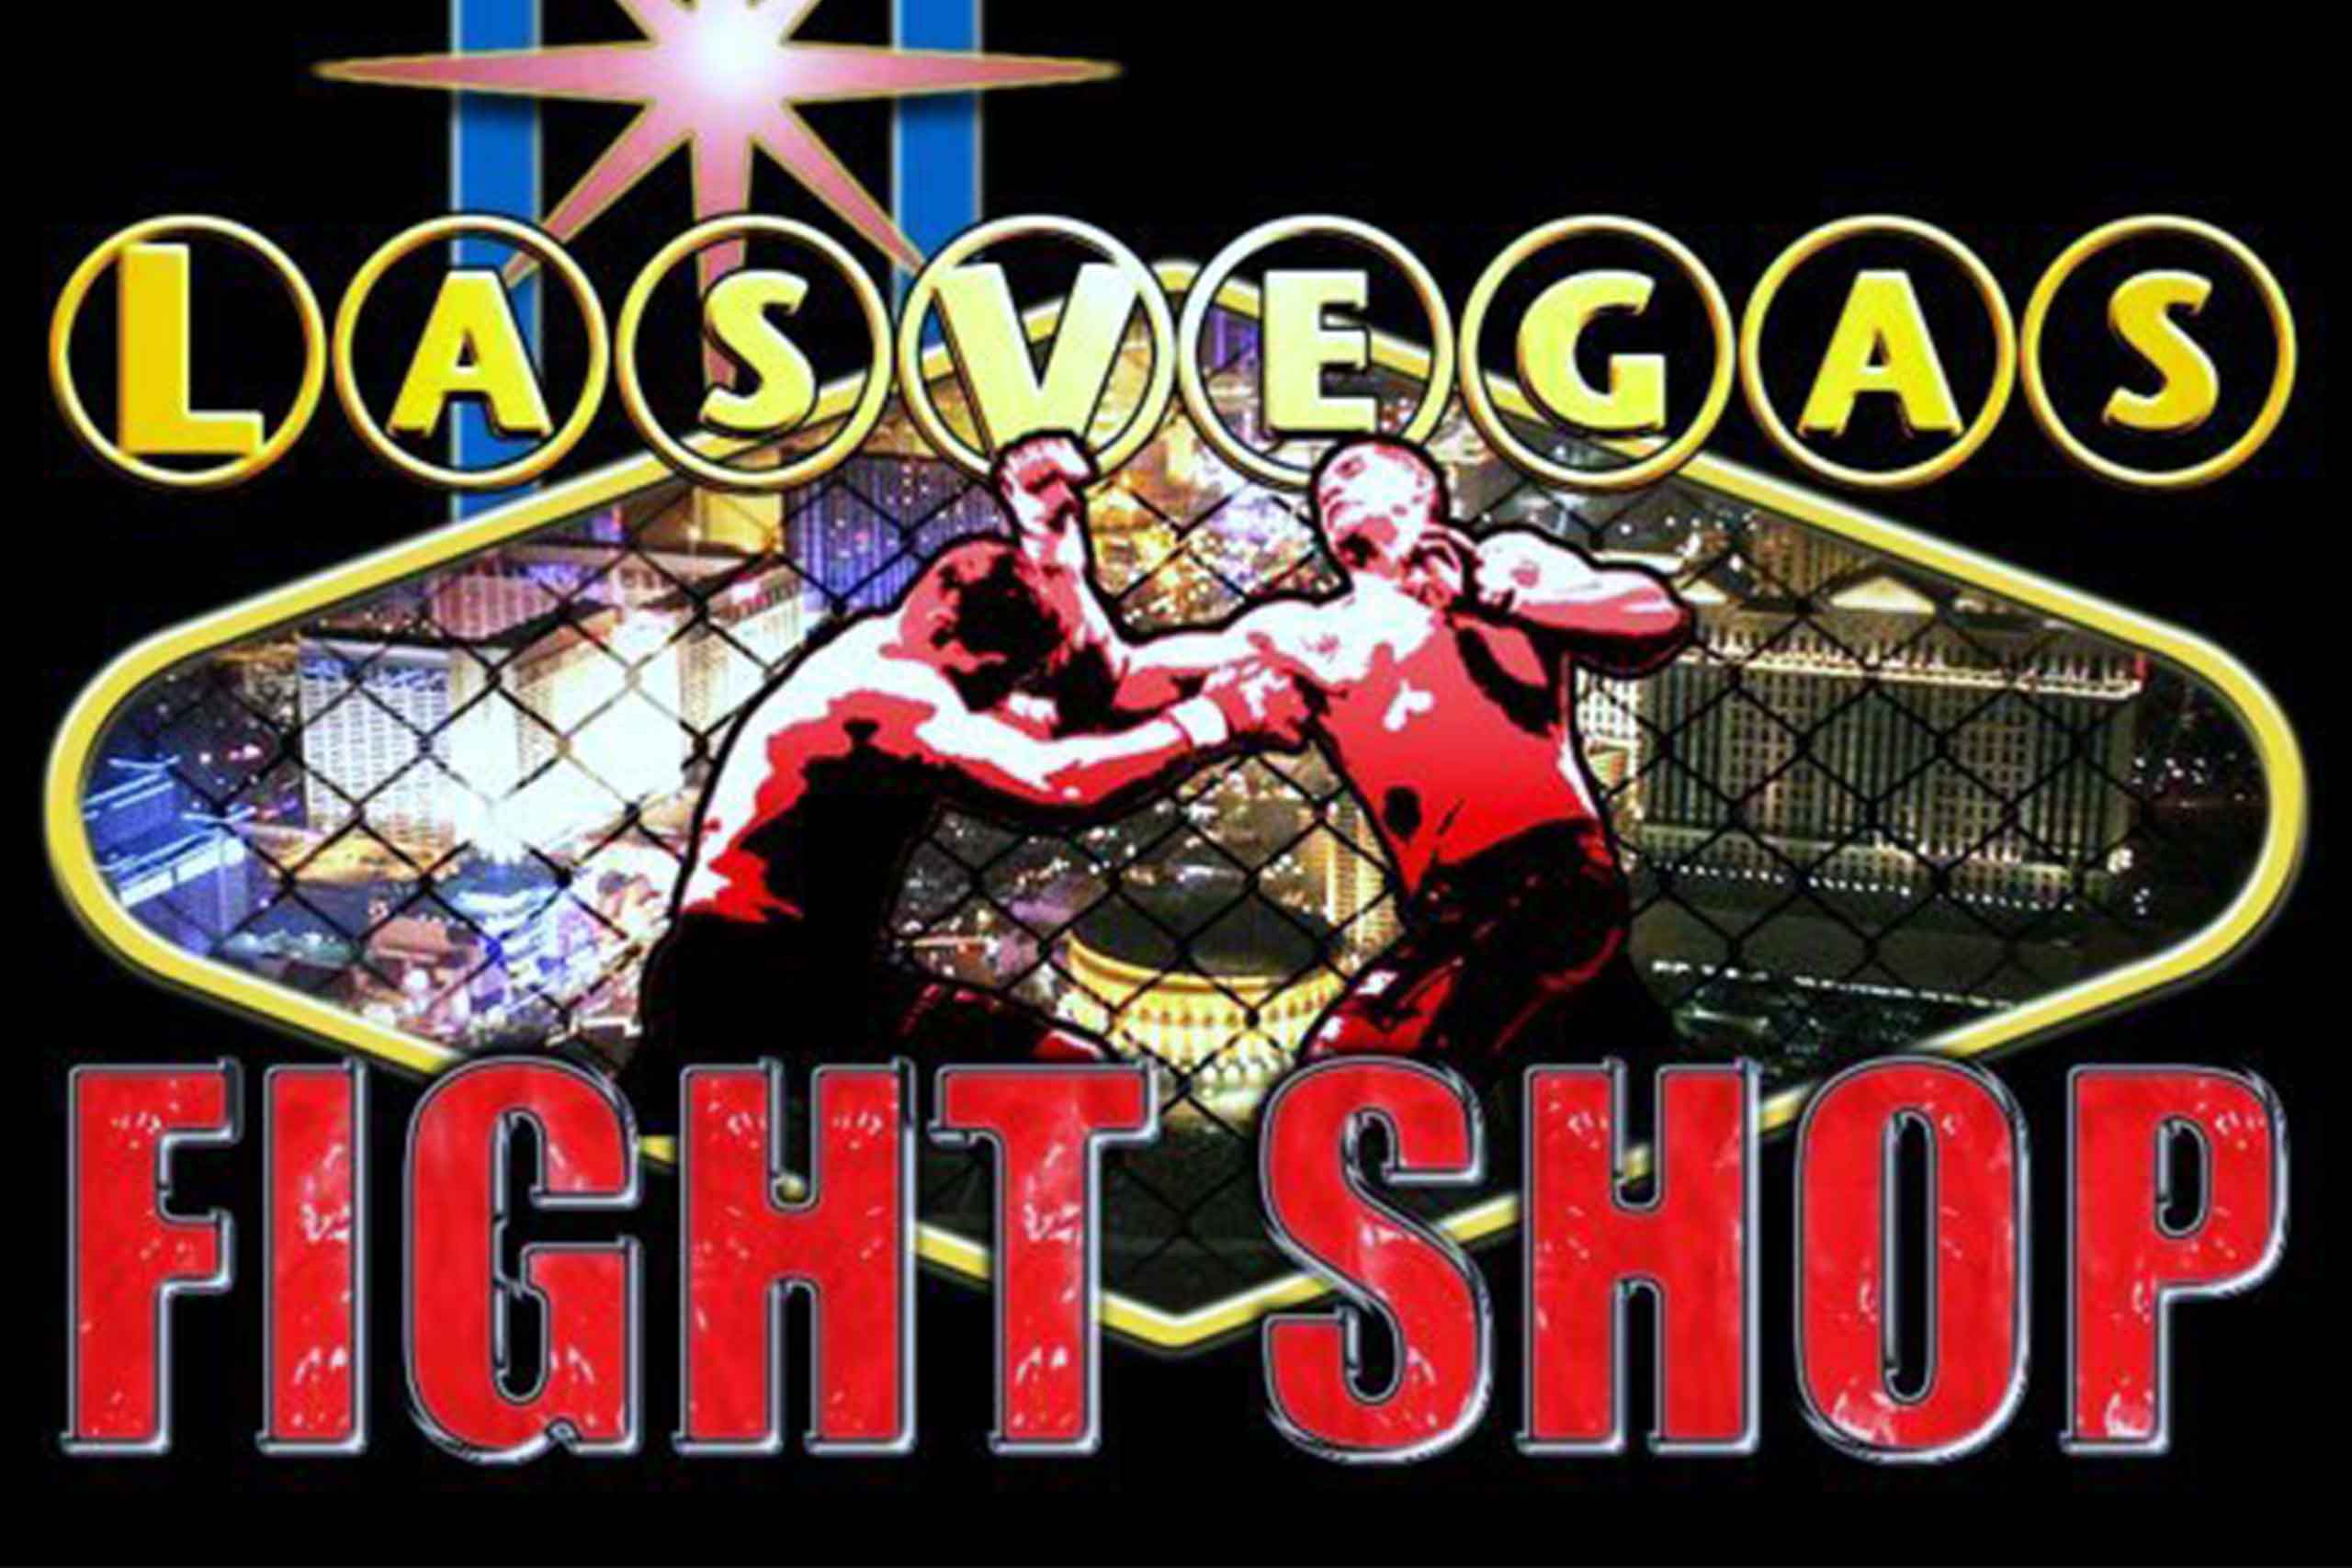 The Las Vegas Fight Shop